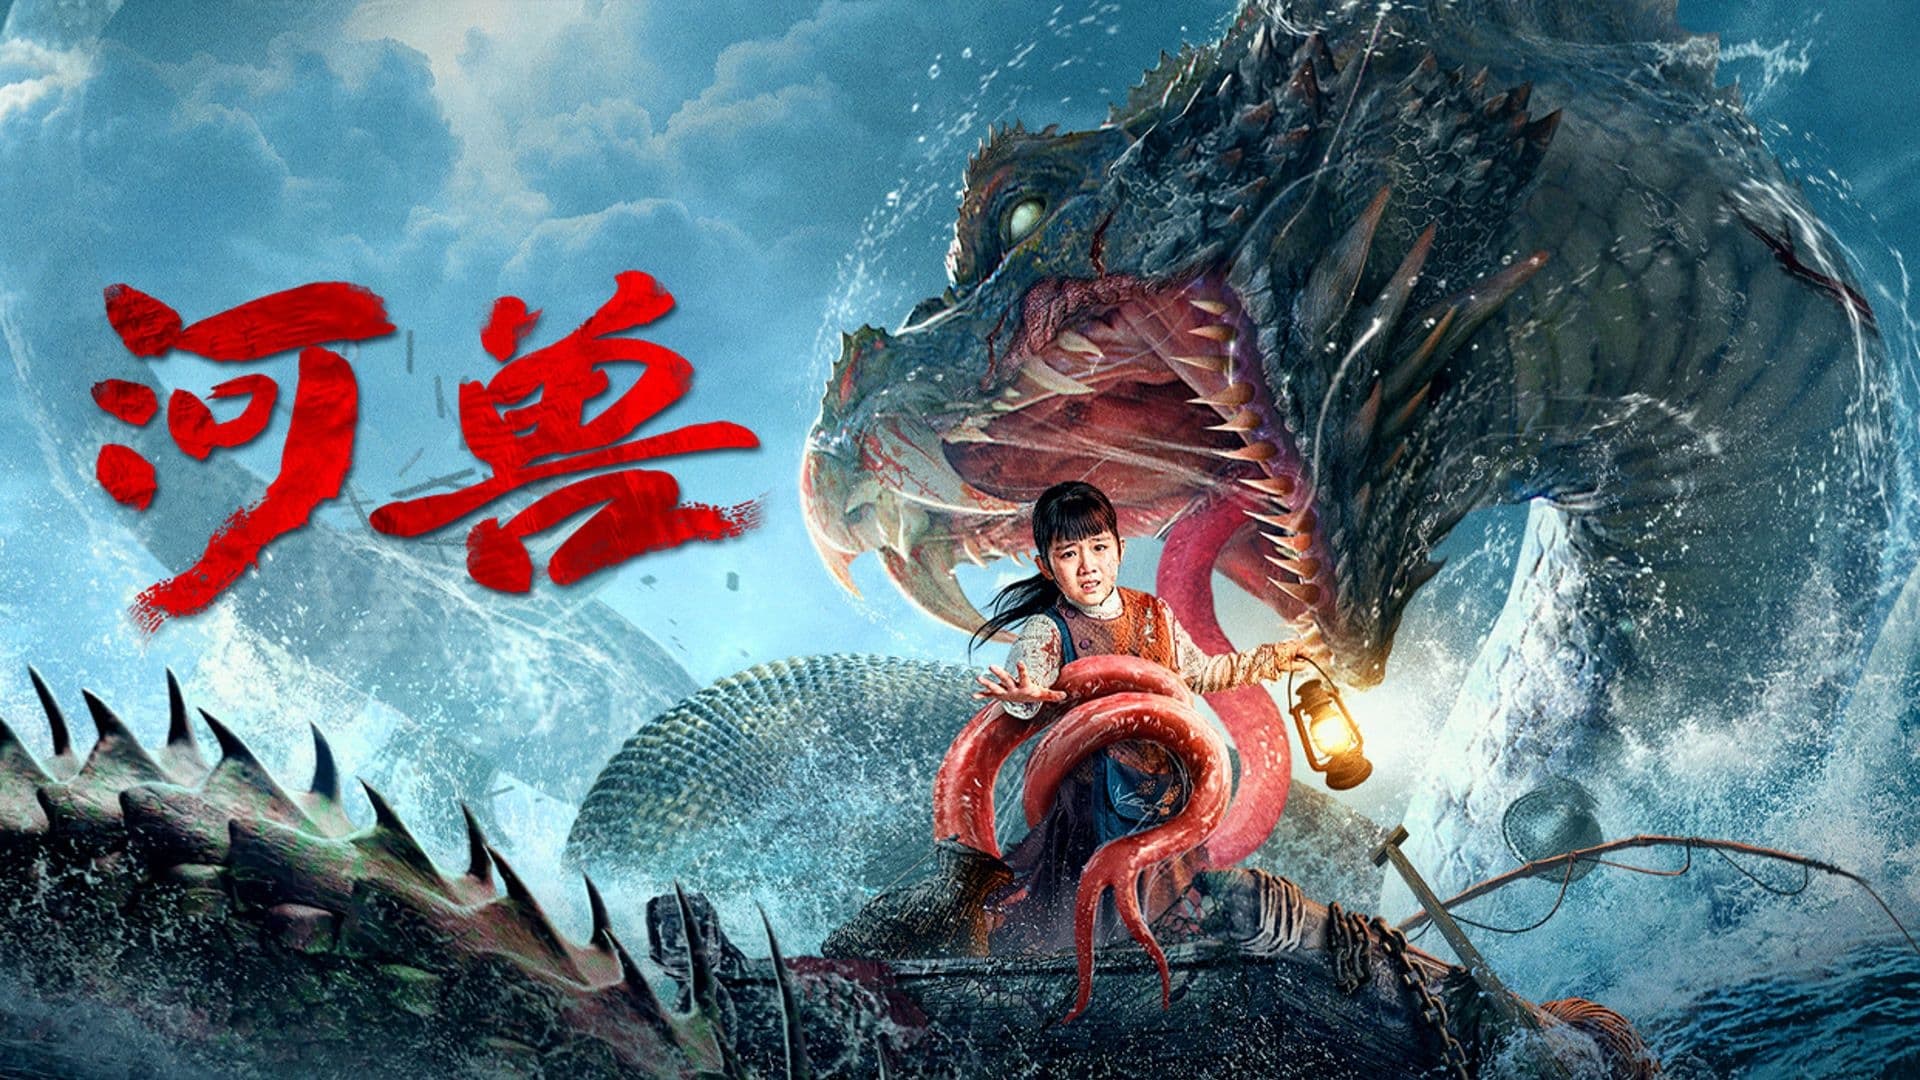 Hà thú - The beast in the river